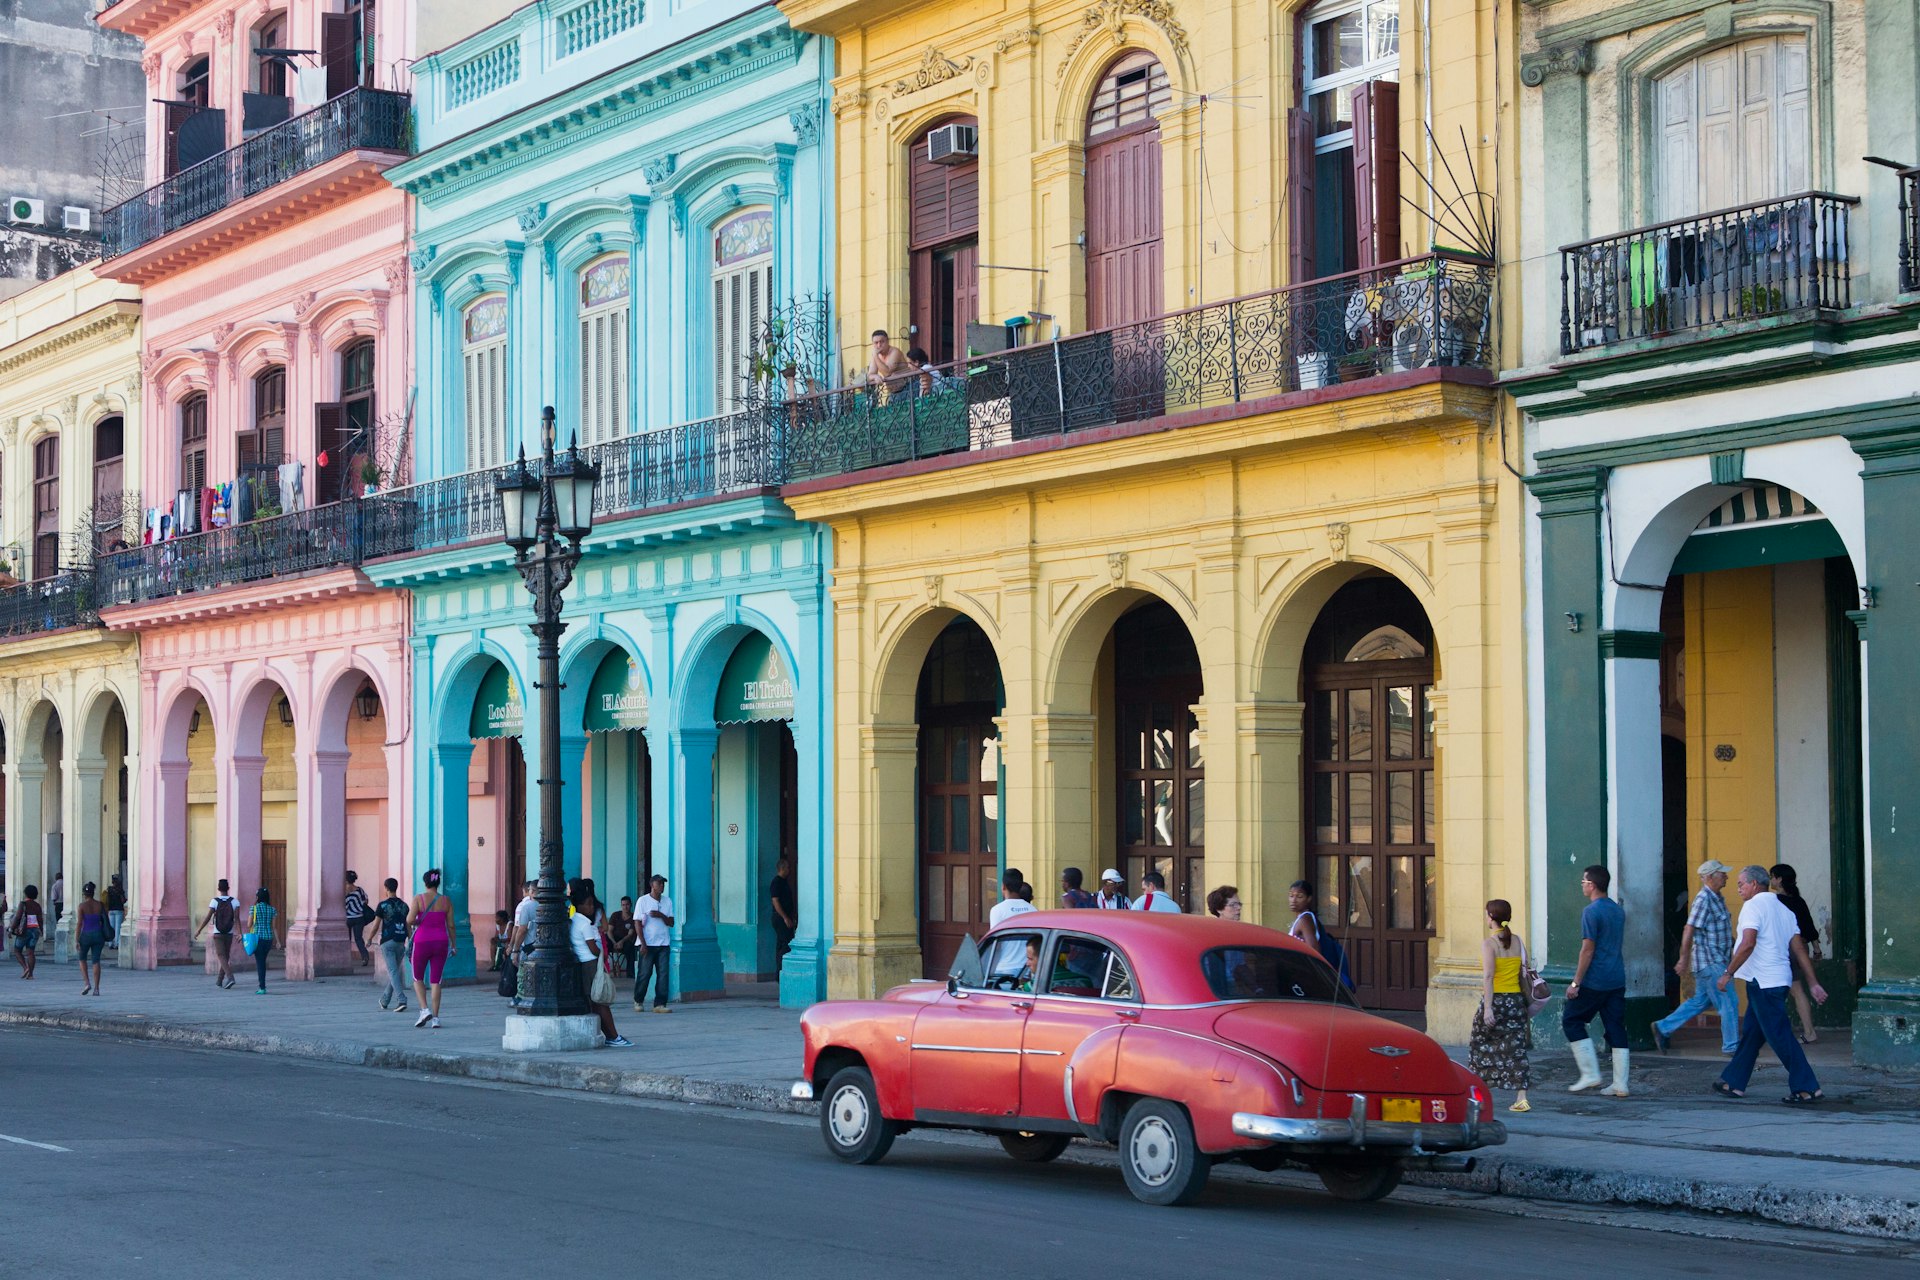 Colorful houses in Havana